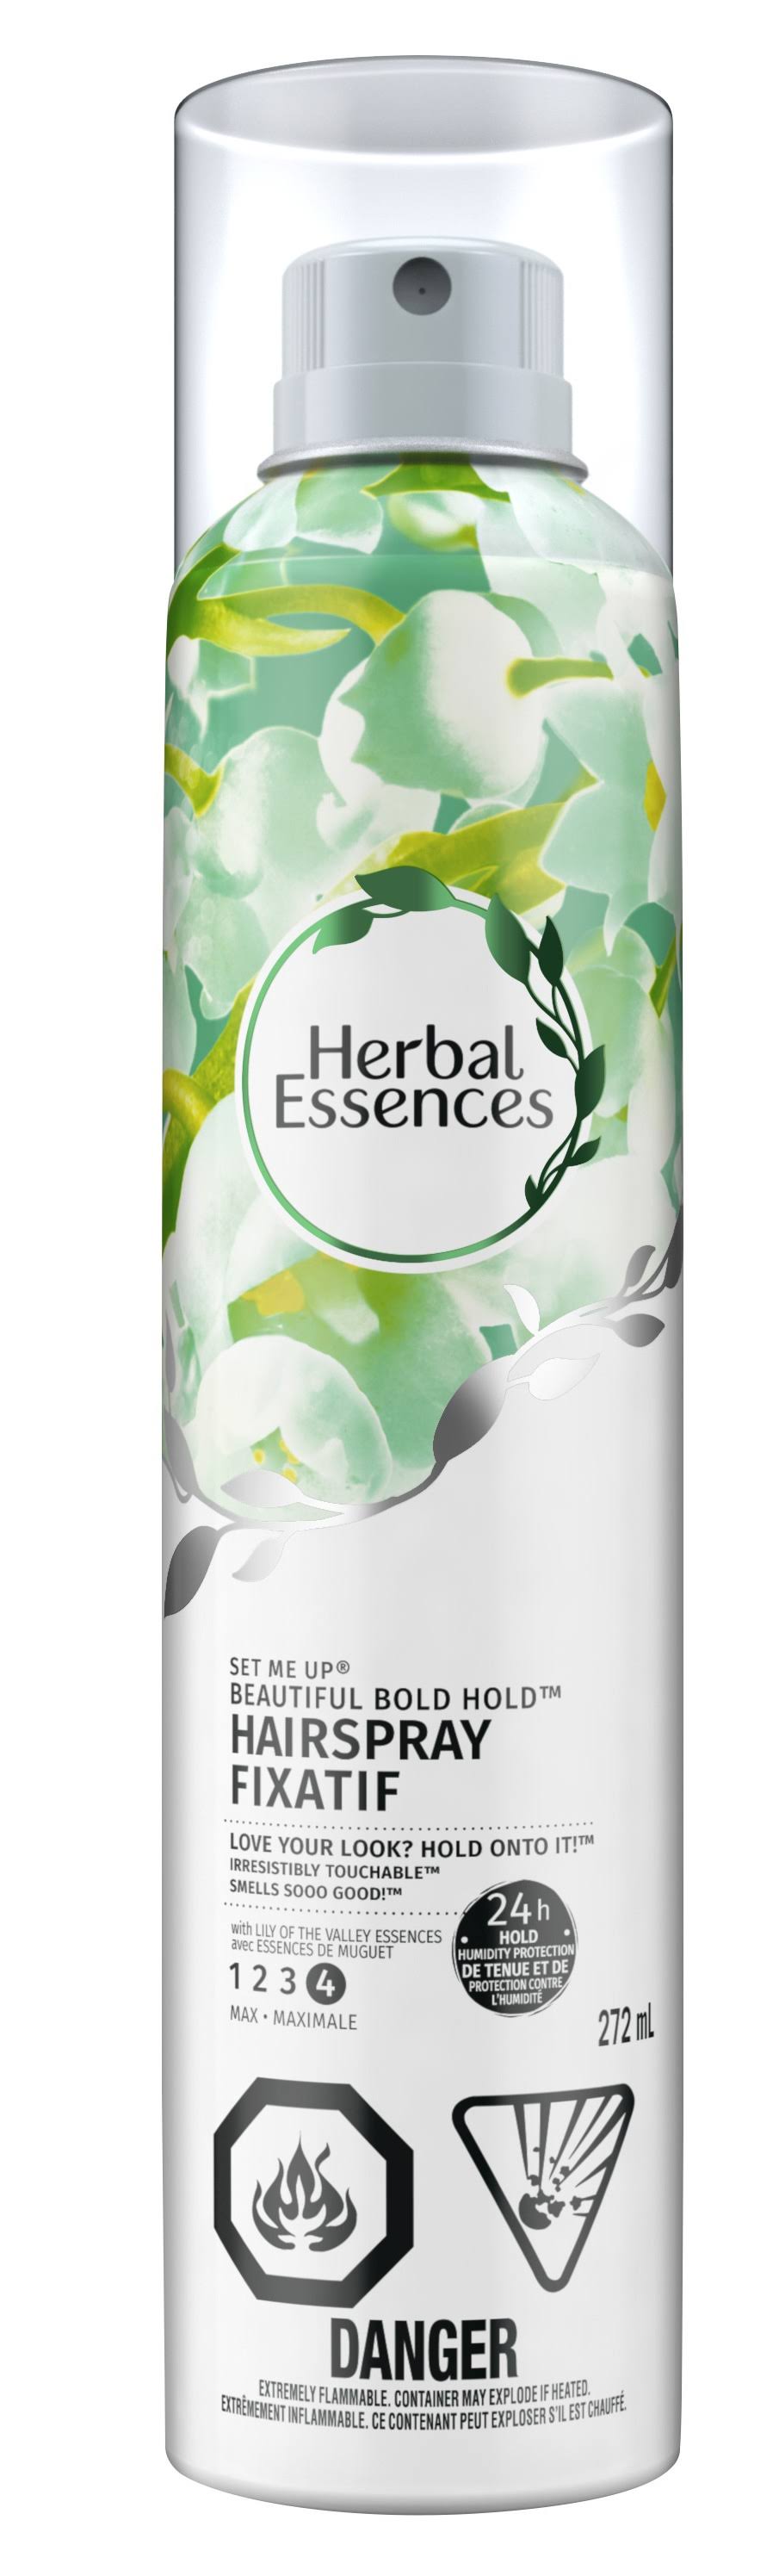 Herbal Essences Set Me Up Beautiful Bold Hold Hairspray 272 mL